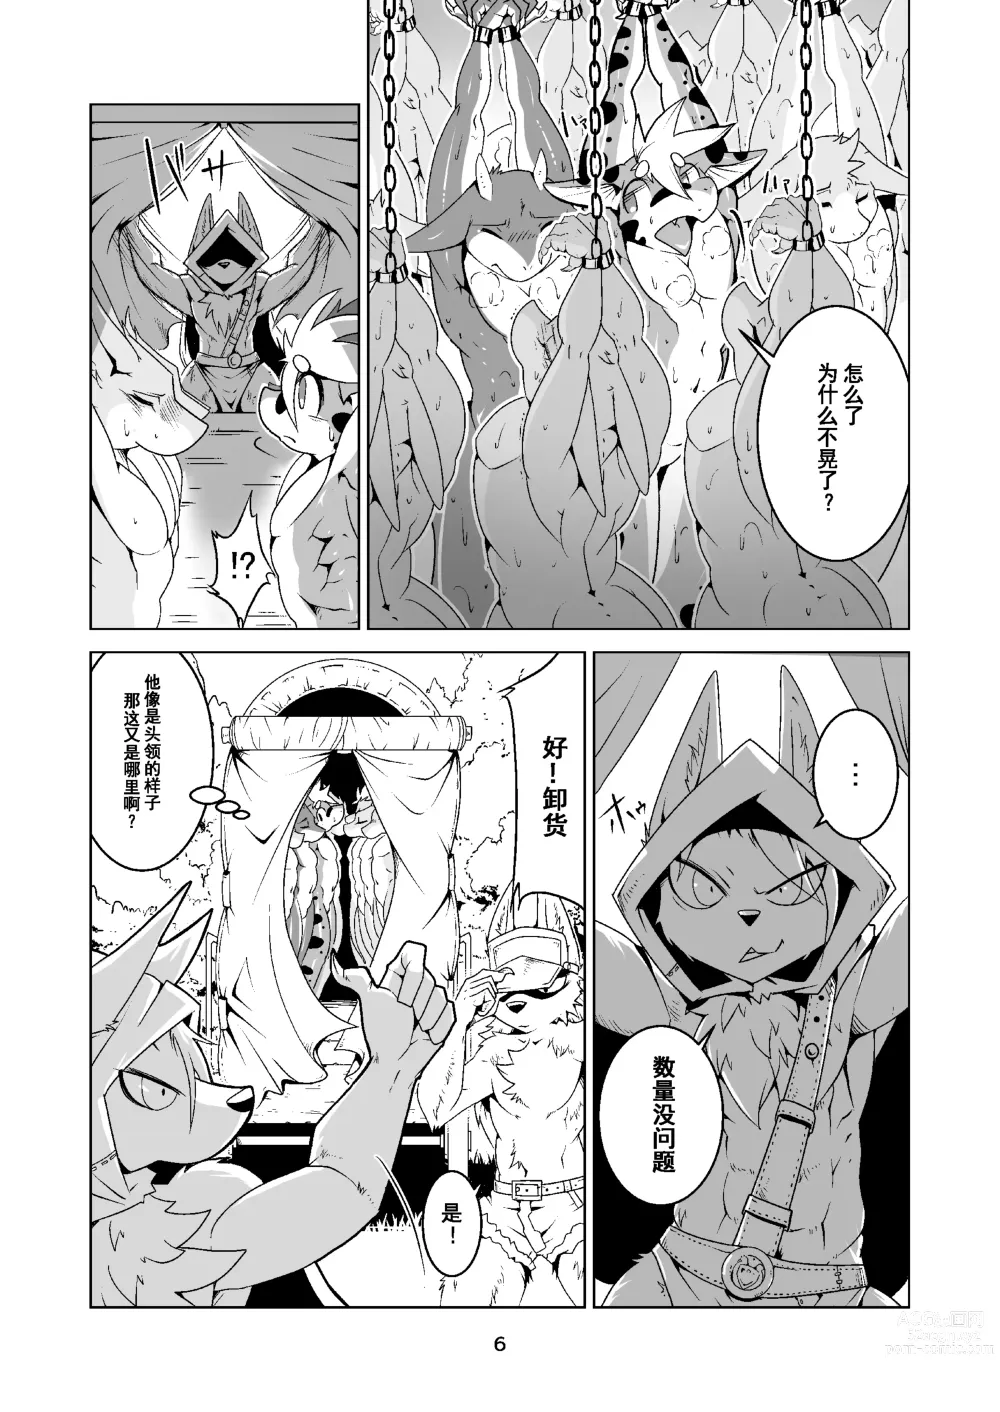 Page 6 of doujinshi Return World 5